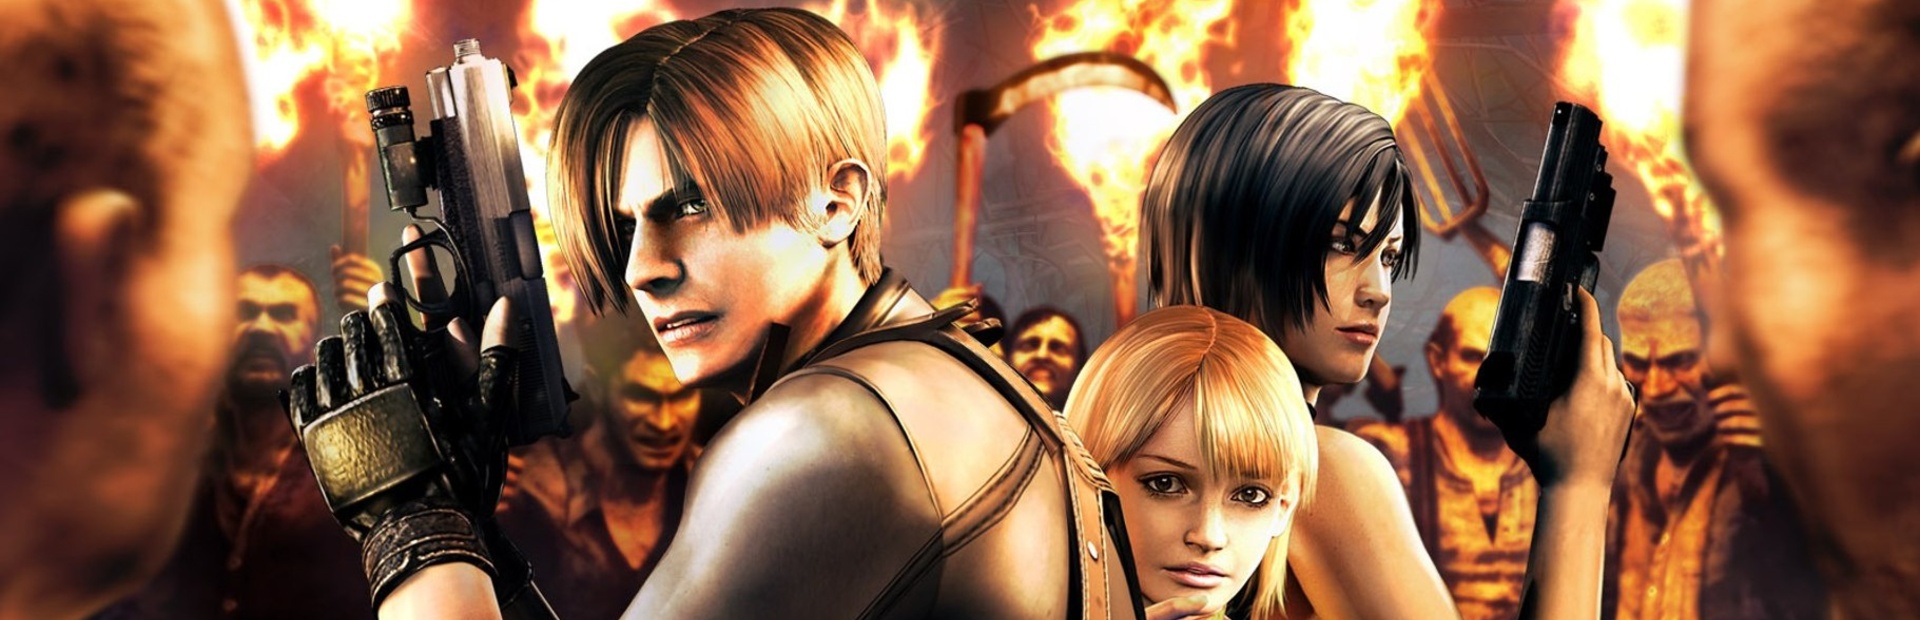 Resident Evil 4: Biohazard +10 Trainer Download